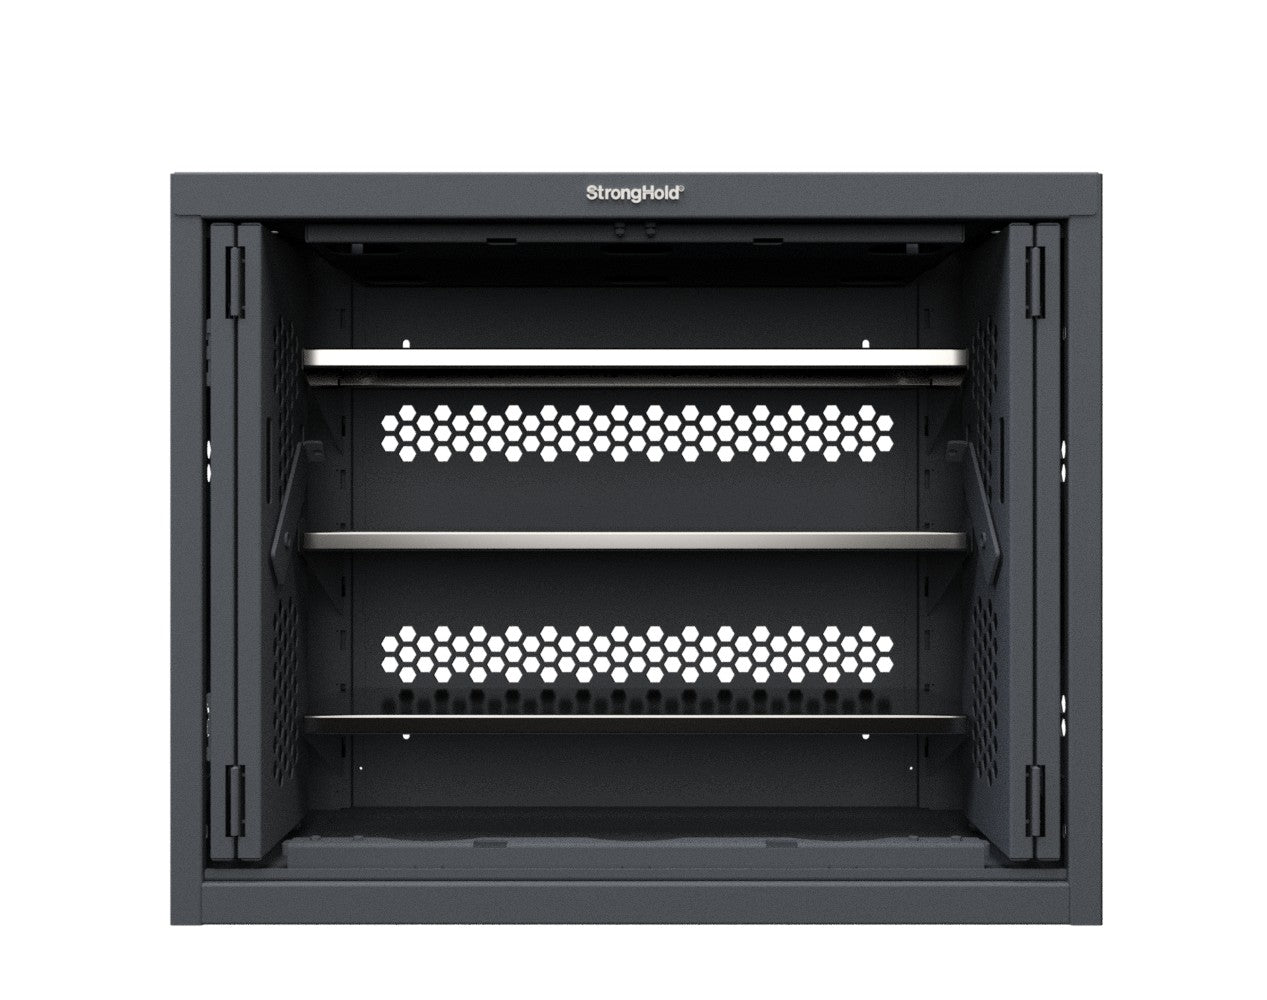 Modular Weapons Storage Low Profile Shelf Cabinet with Bi Fold Swing Doors - 42 in. W x 16 1/2 in. D x 34 in. H